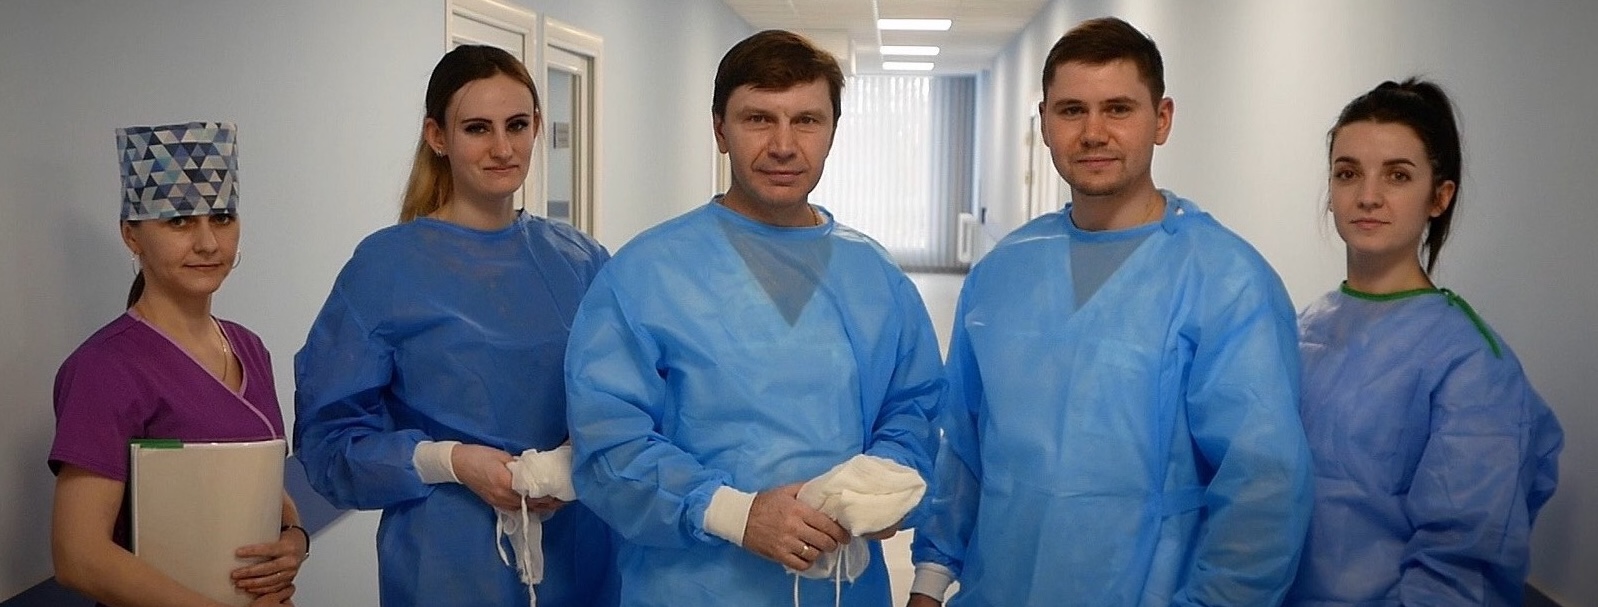 Group_Chernihiv Medical Center of Modern Oncology (kopie)